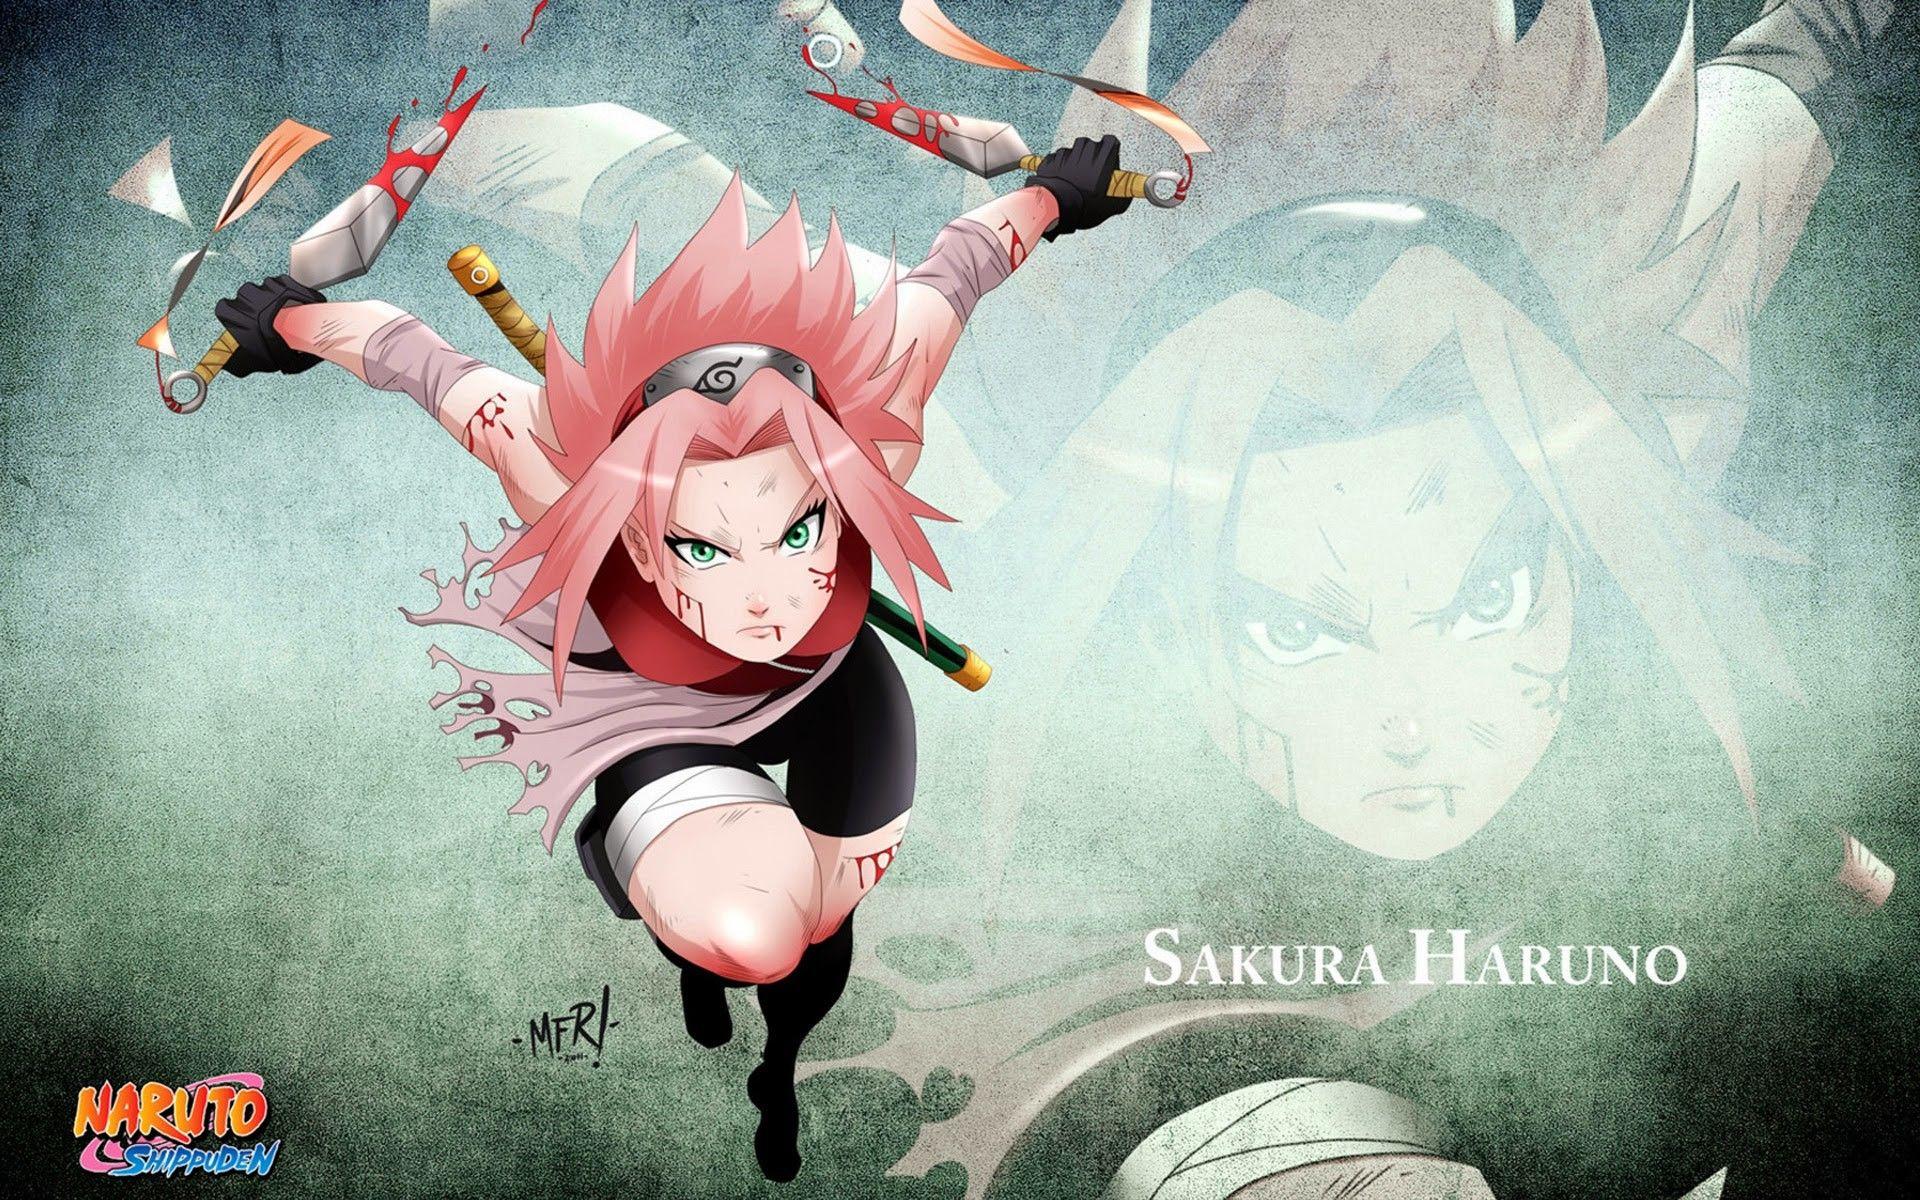 Sakura Haruno Computer Wallpapers - Top Free Sakura Haruno Computer